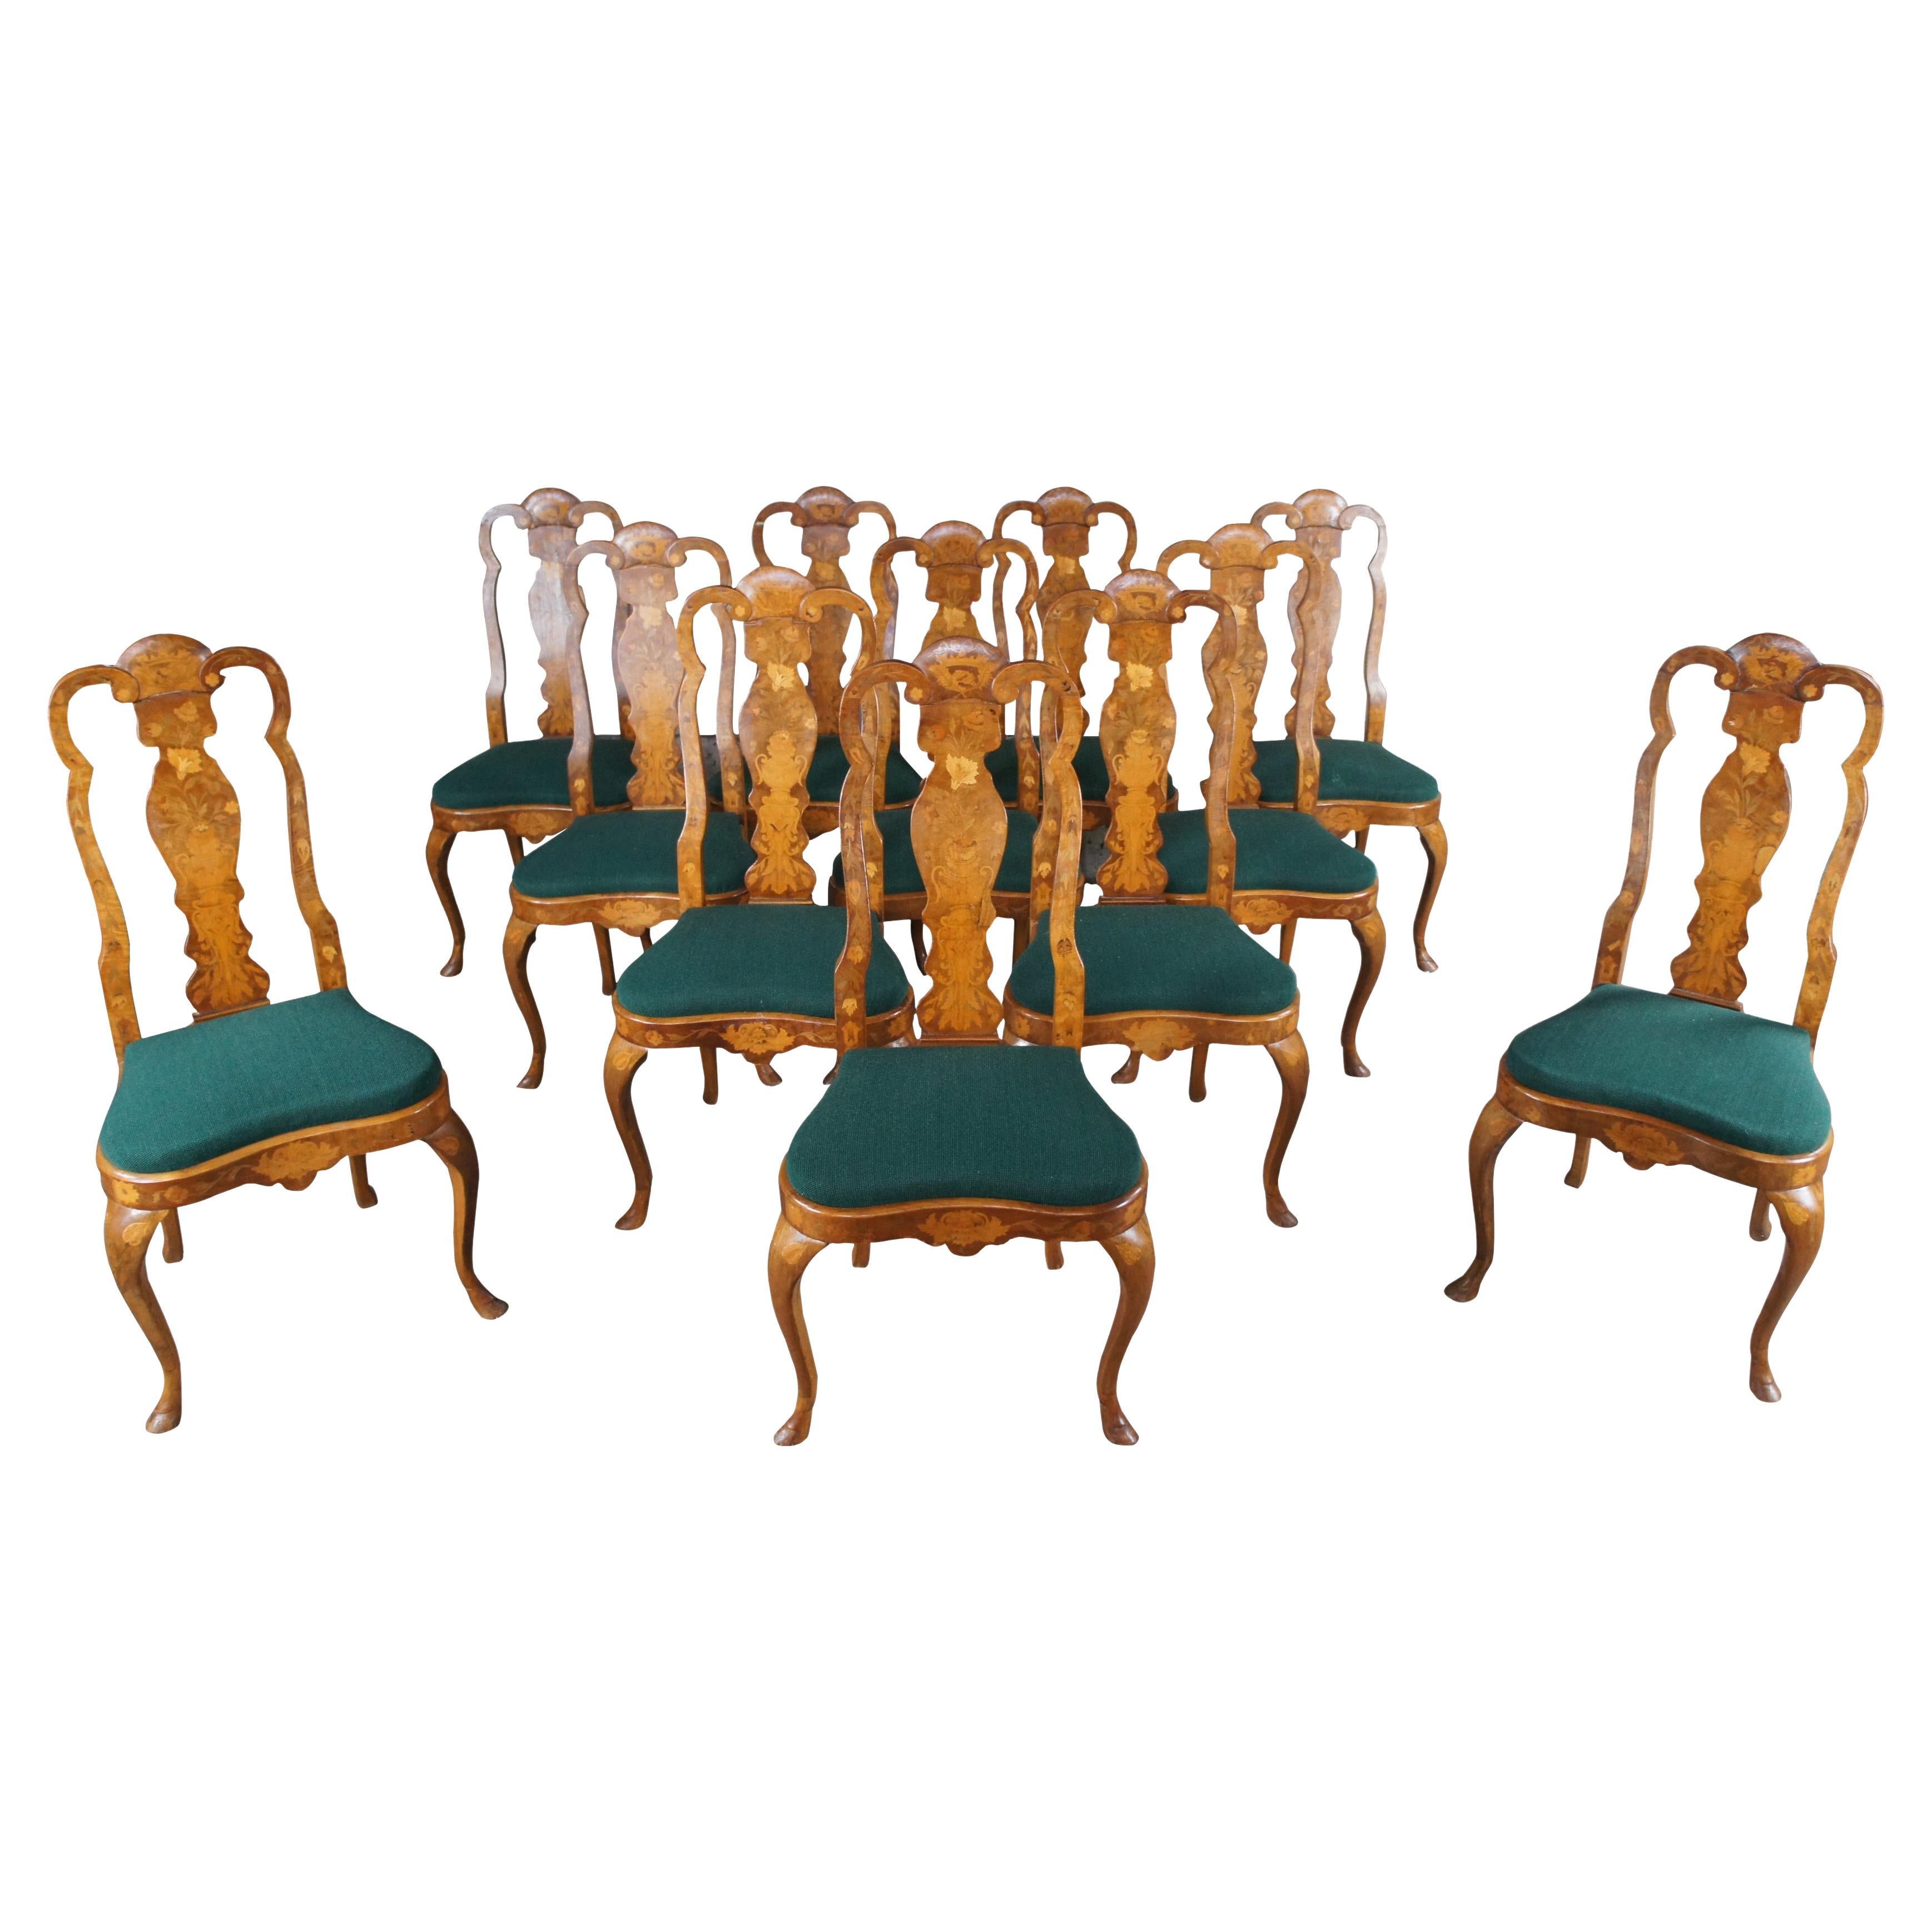 12 Vintage 20th Century Dutch Marquetry Walnut &Ash Inlaid Dining Side Chairs